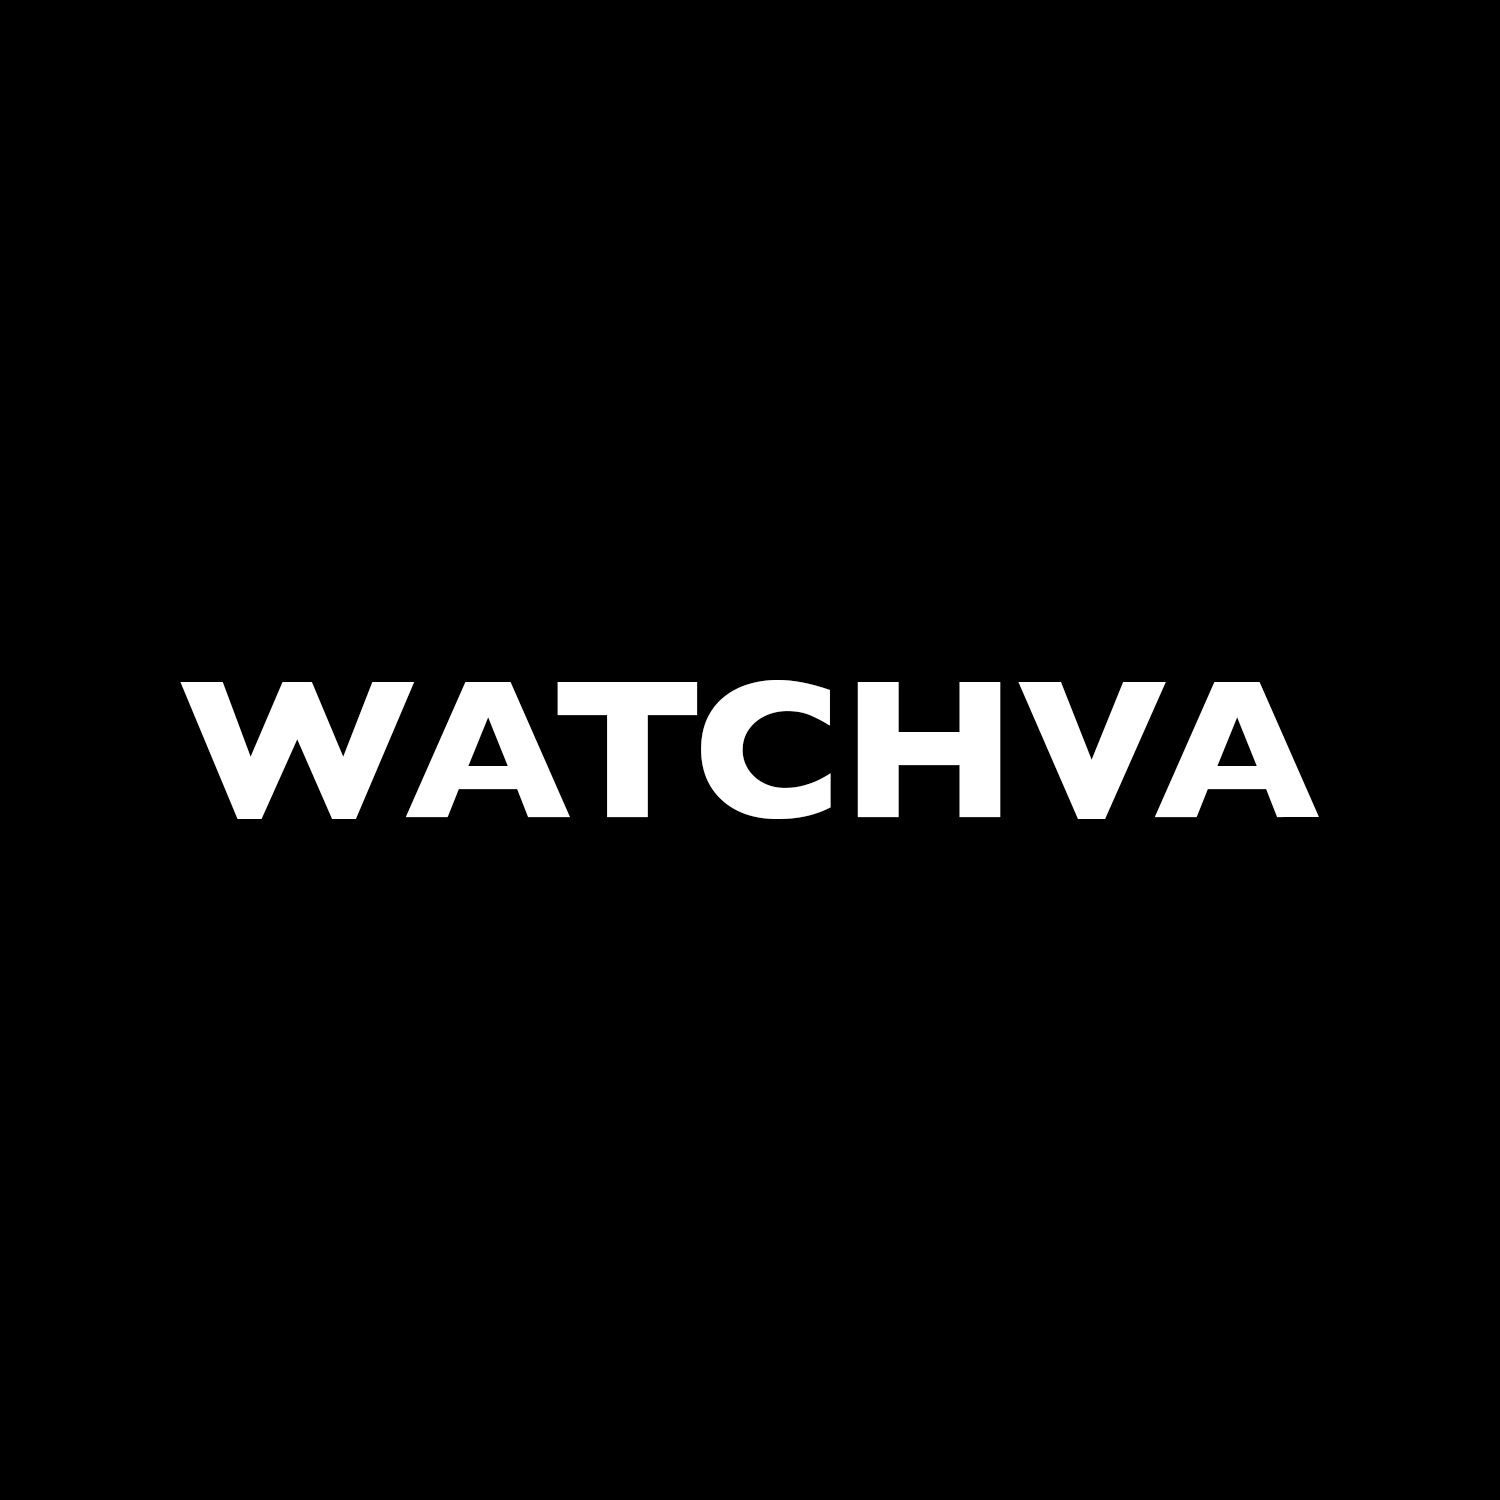 Watchva Logo